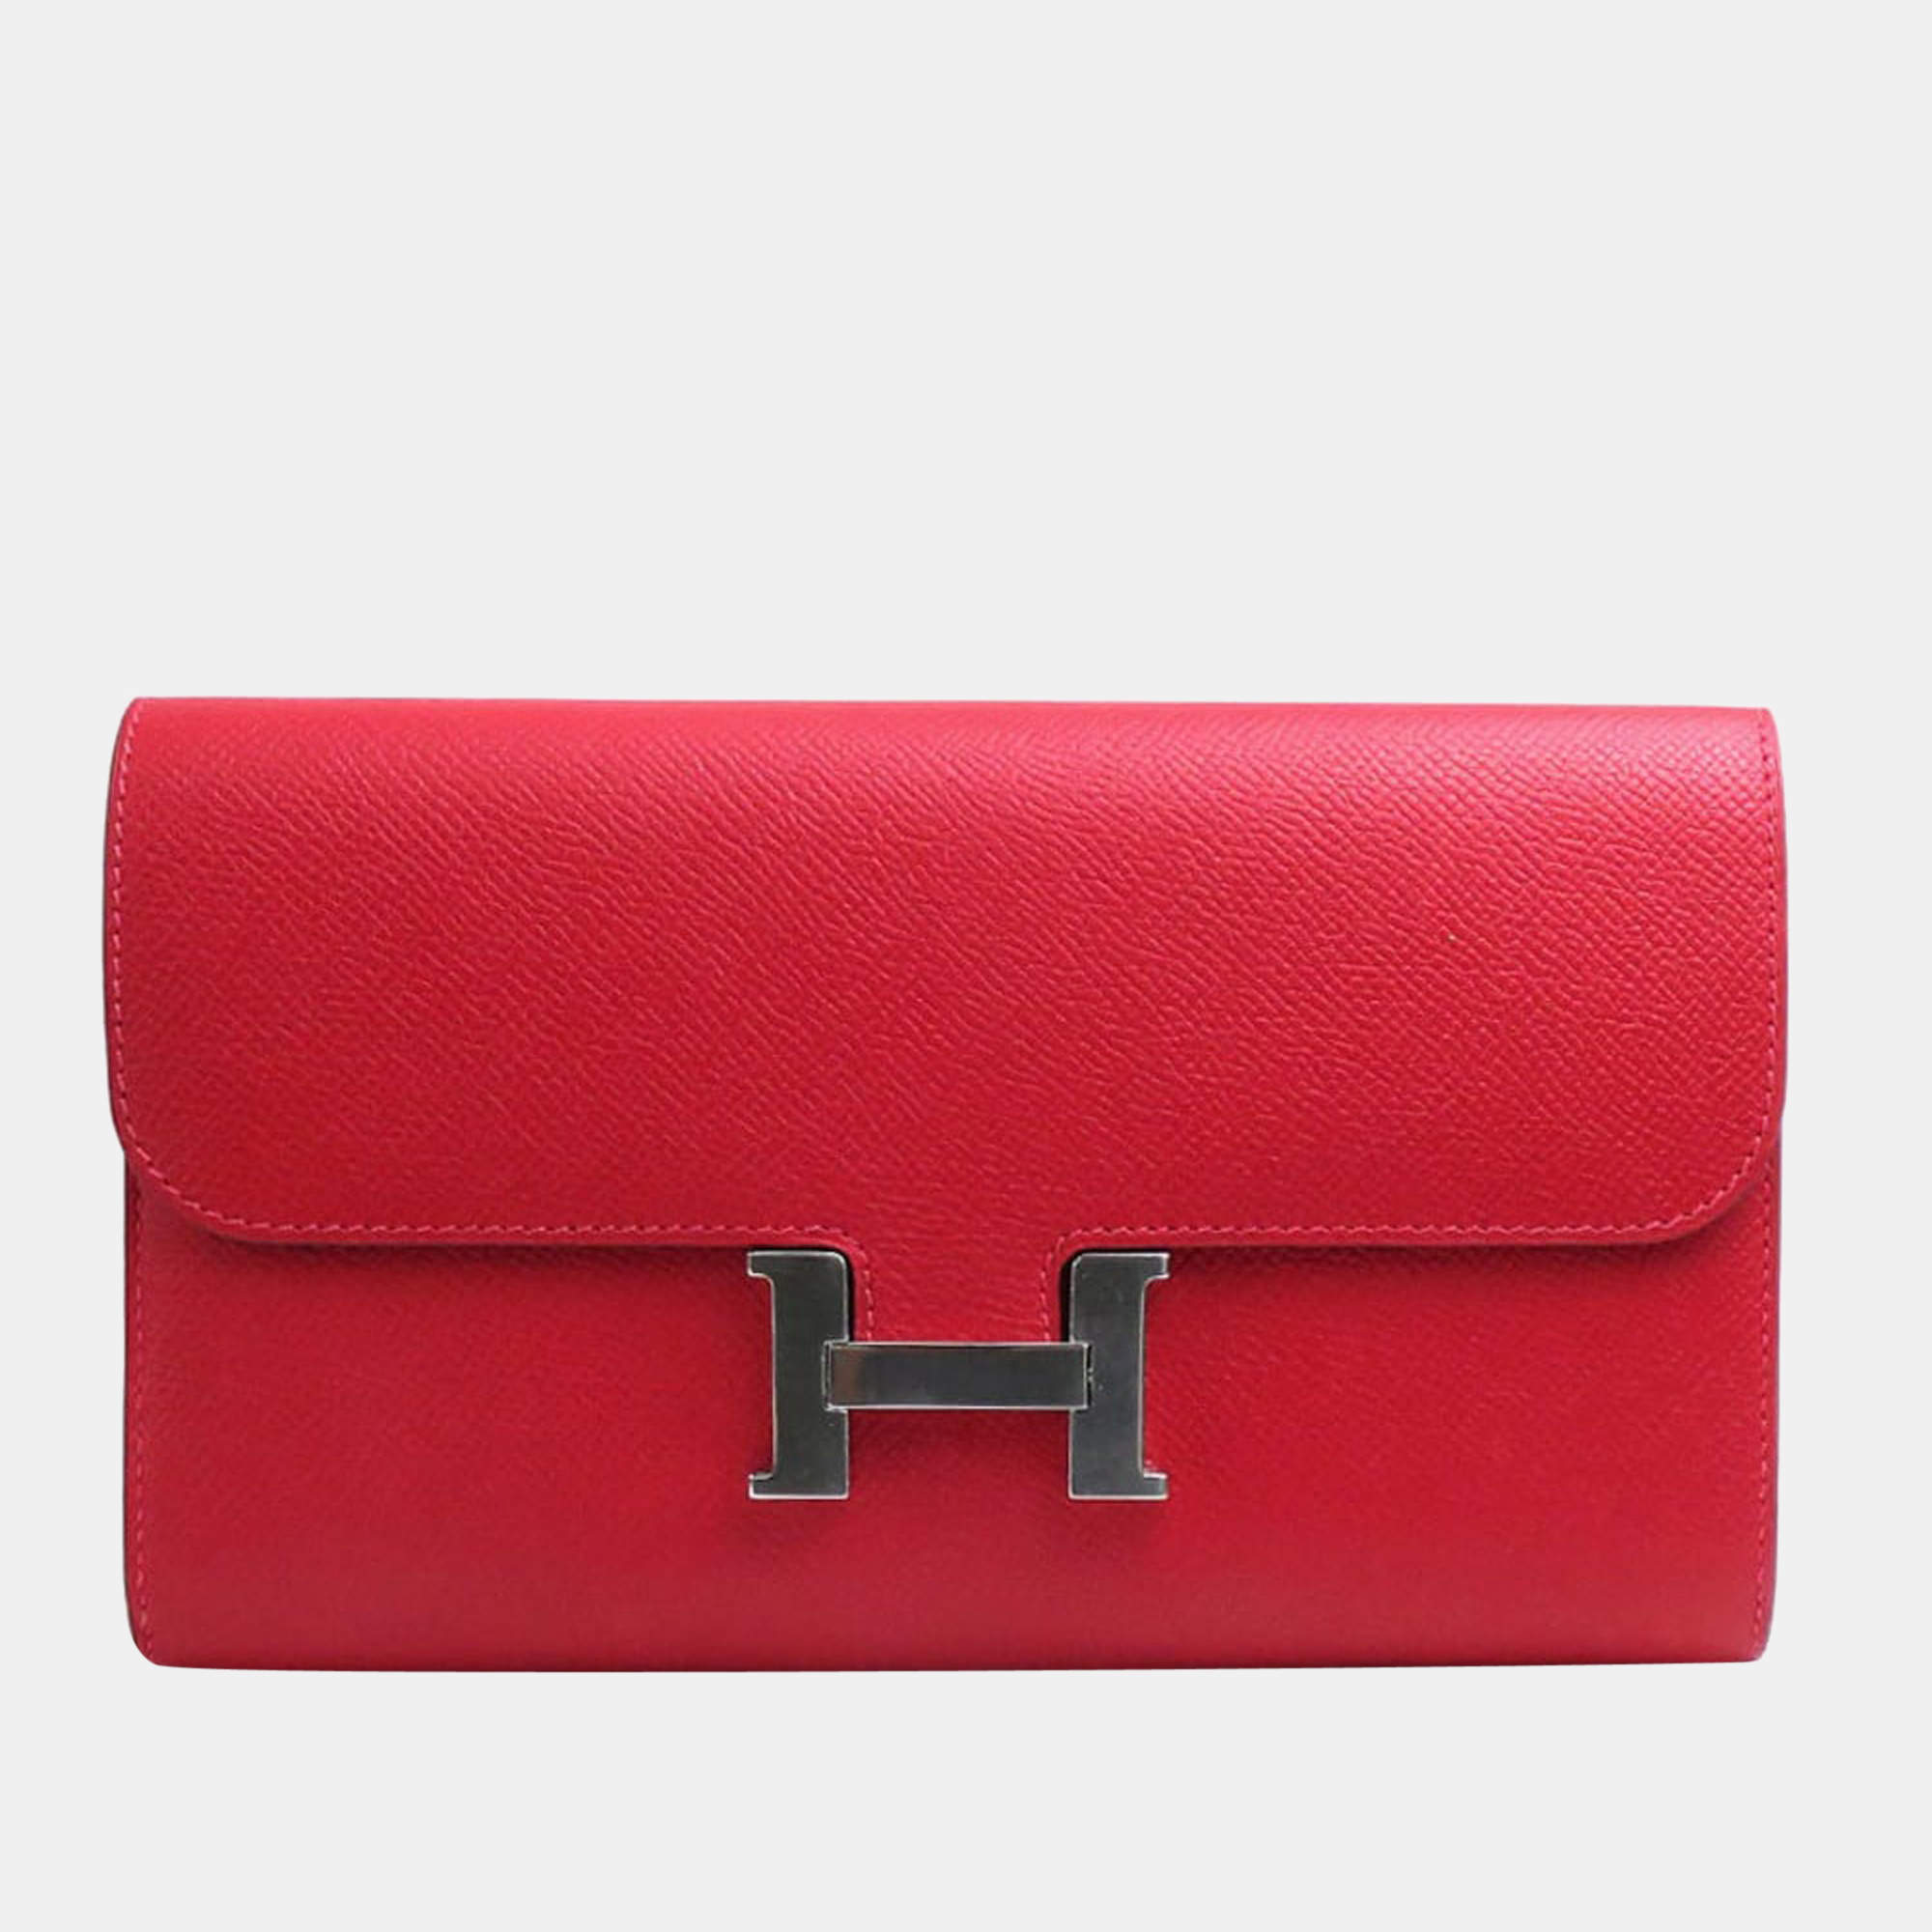 HERMES WALLET 2021】Hermès wallet / long wallet collection!